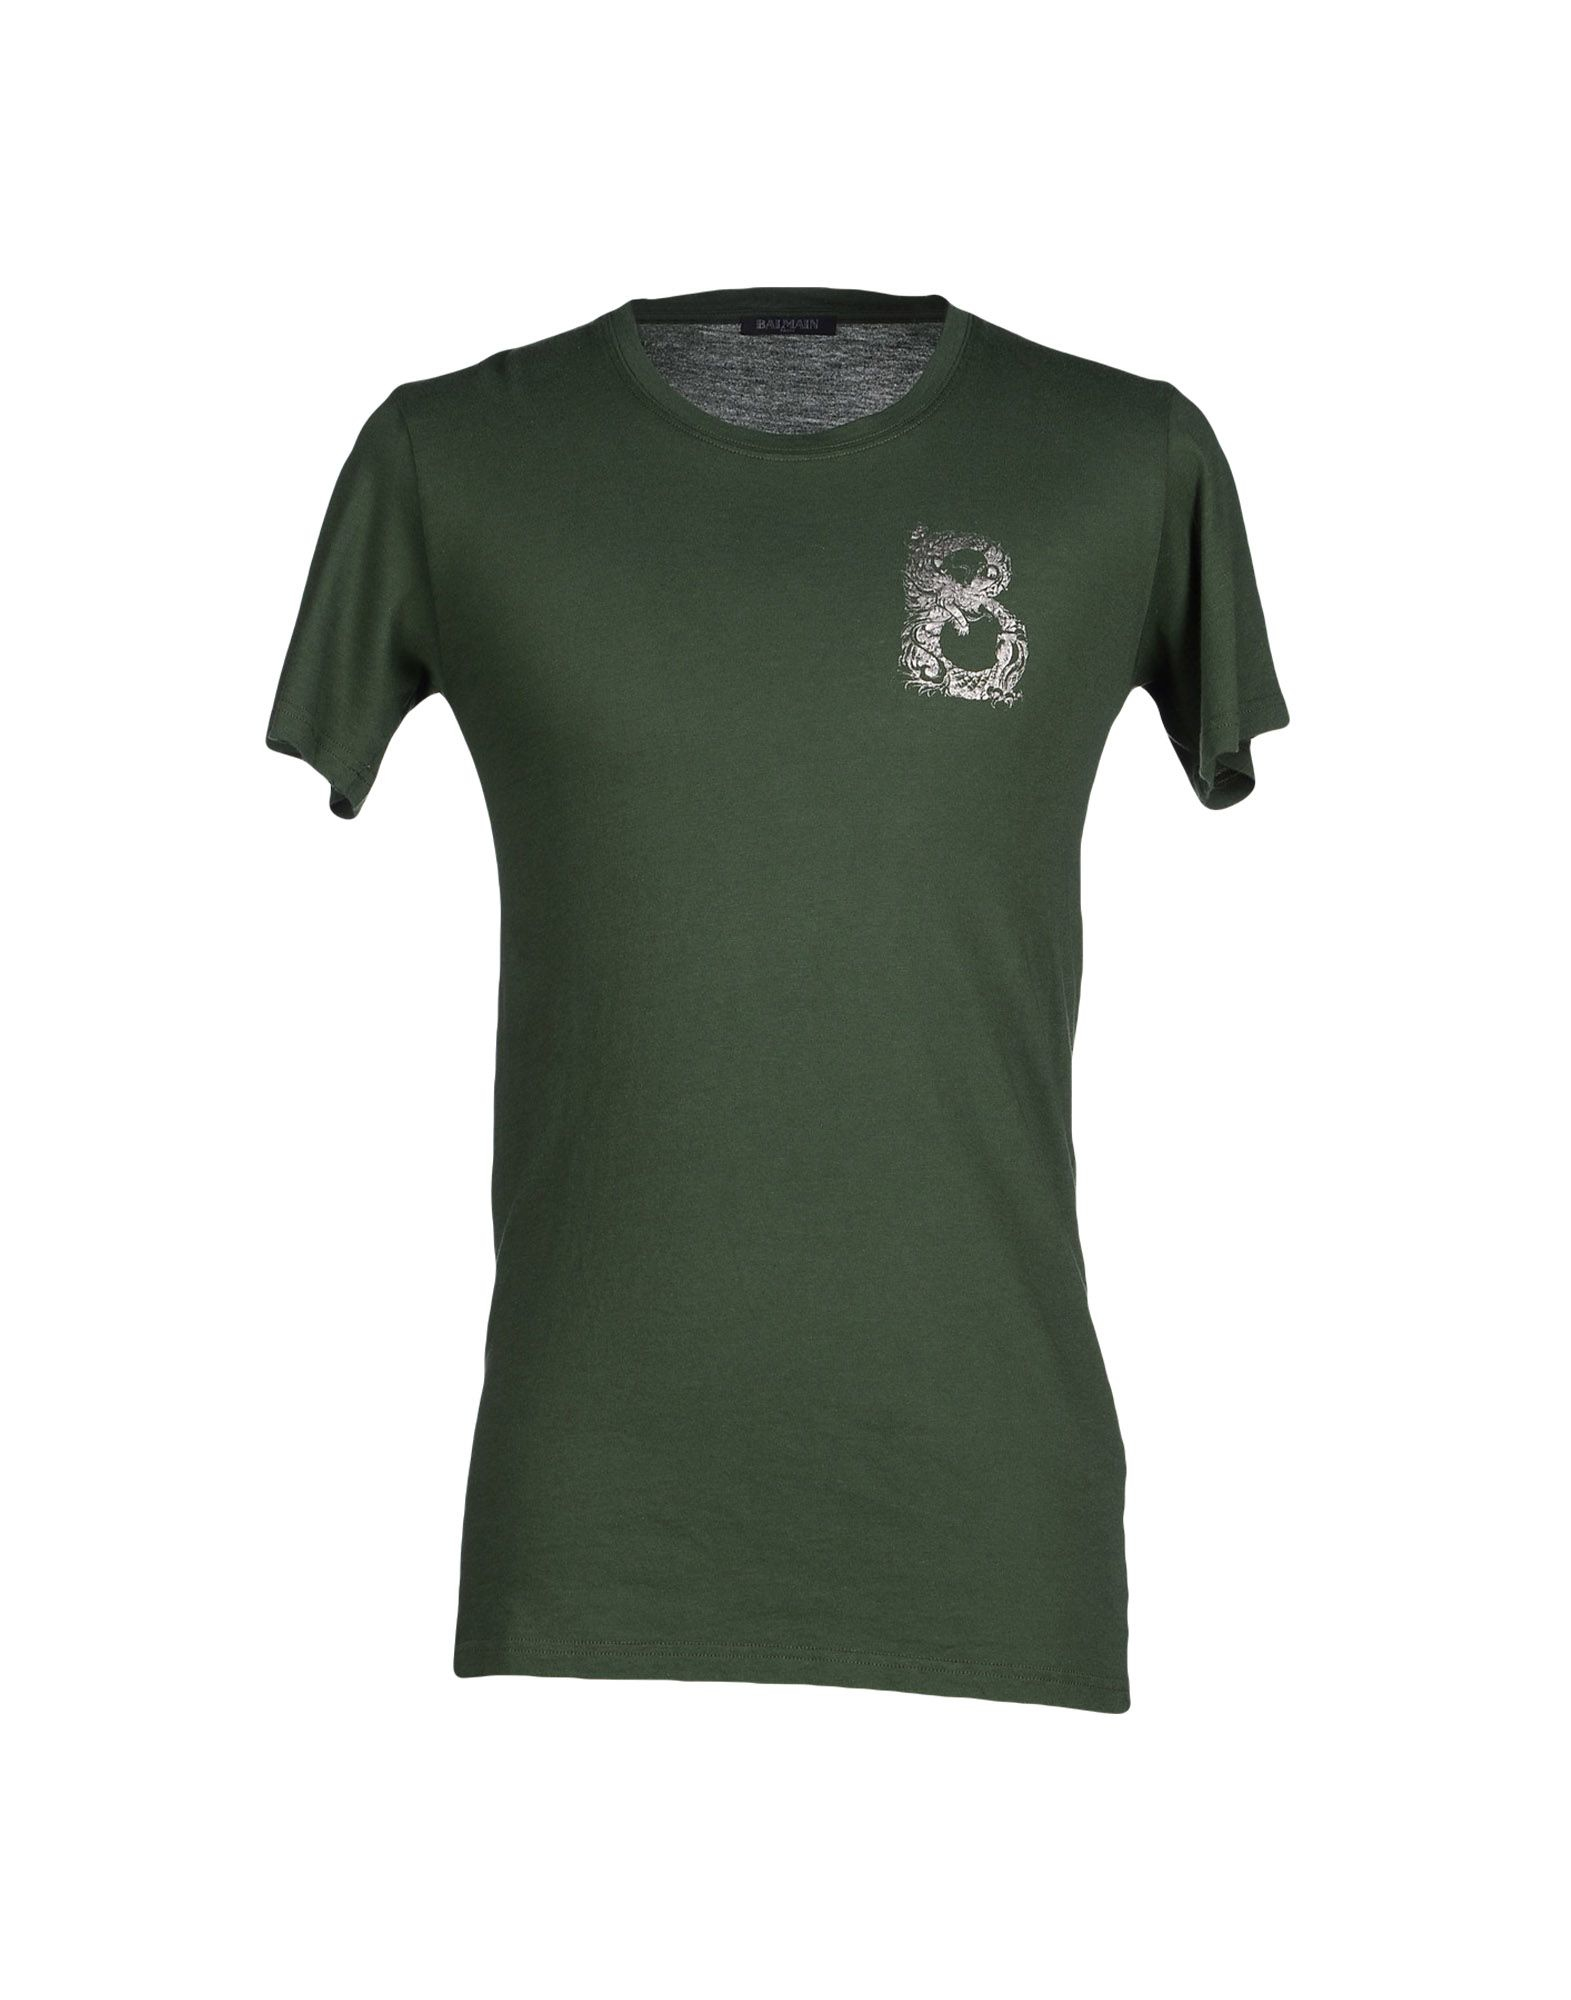 Lyst - Balmain T-shirt in Green for Men